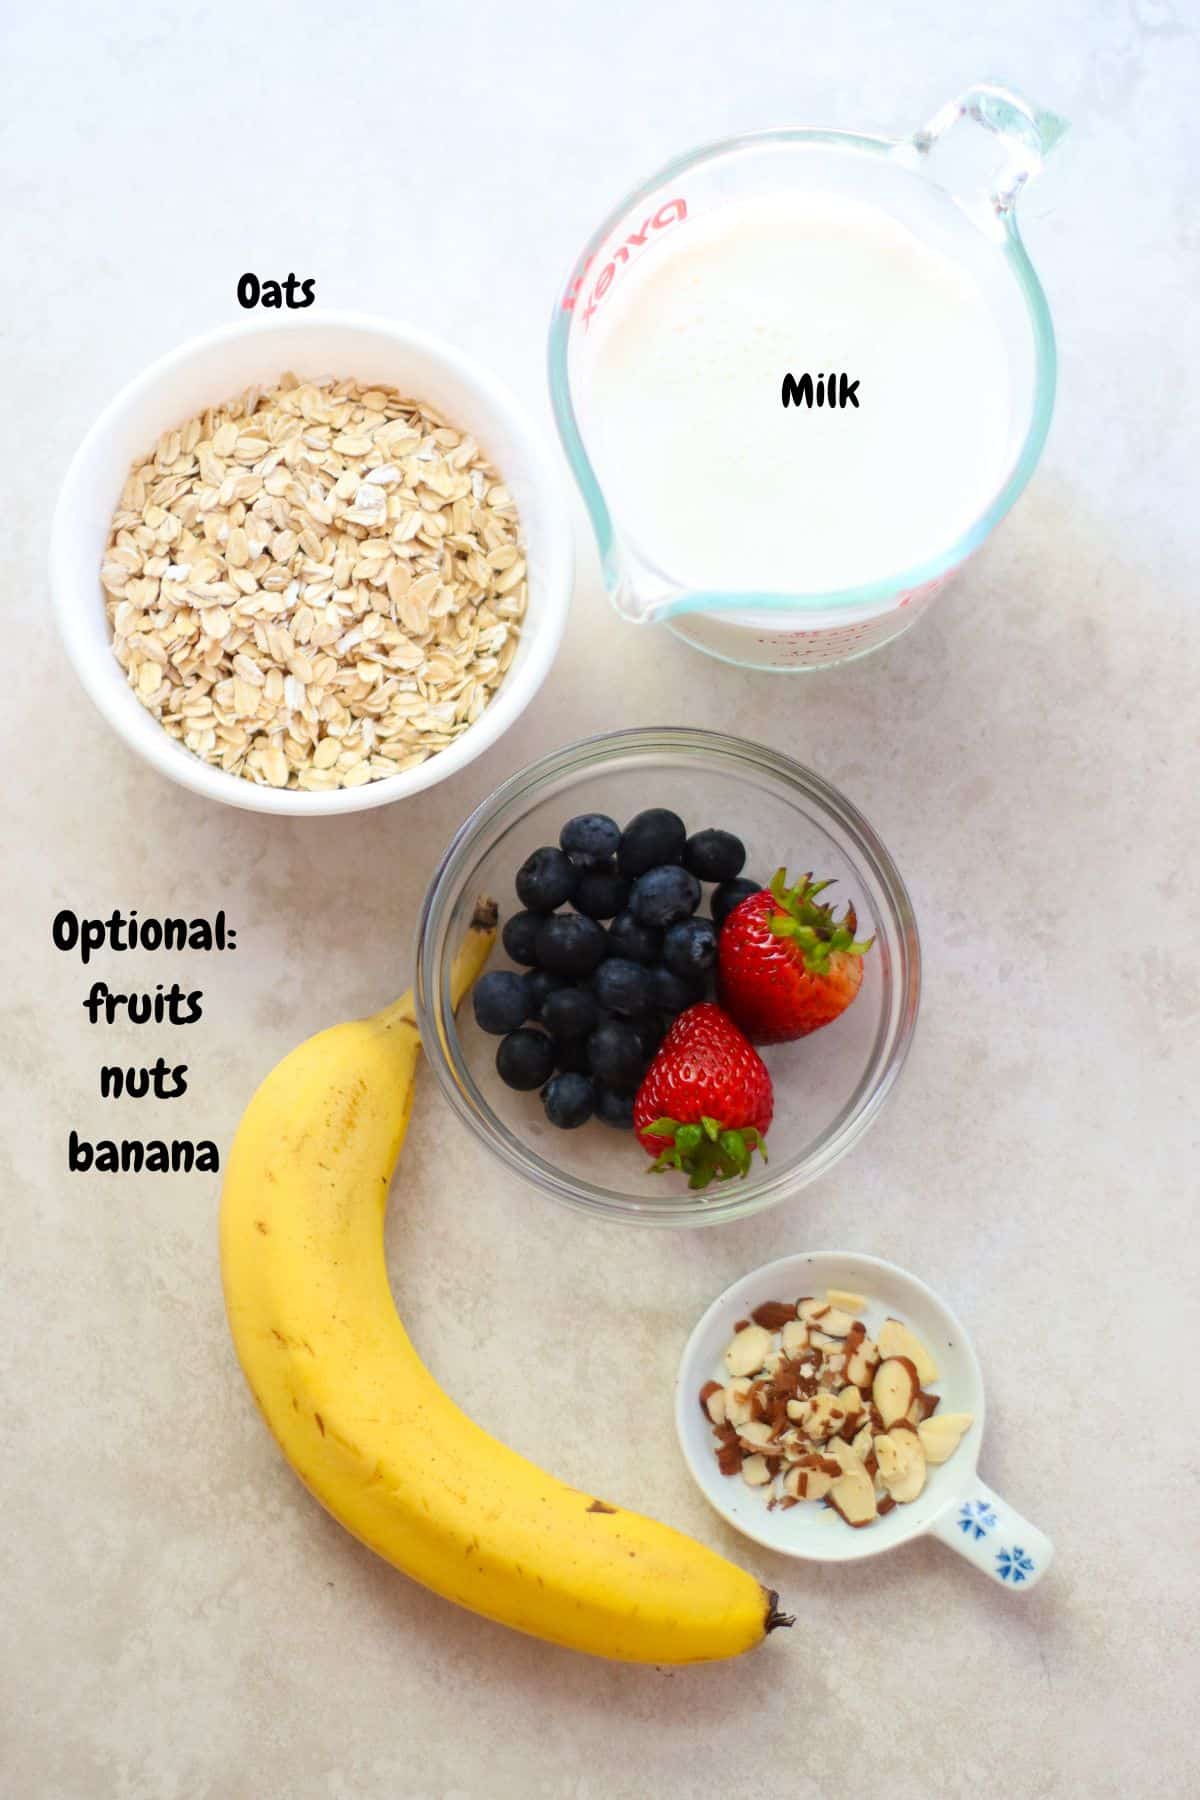 oats, milk, banana, fruits, and sliced almonds.